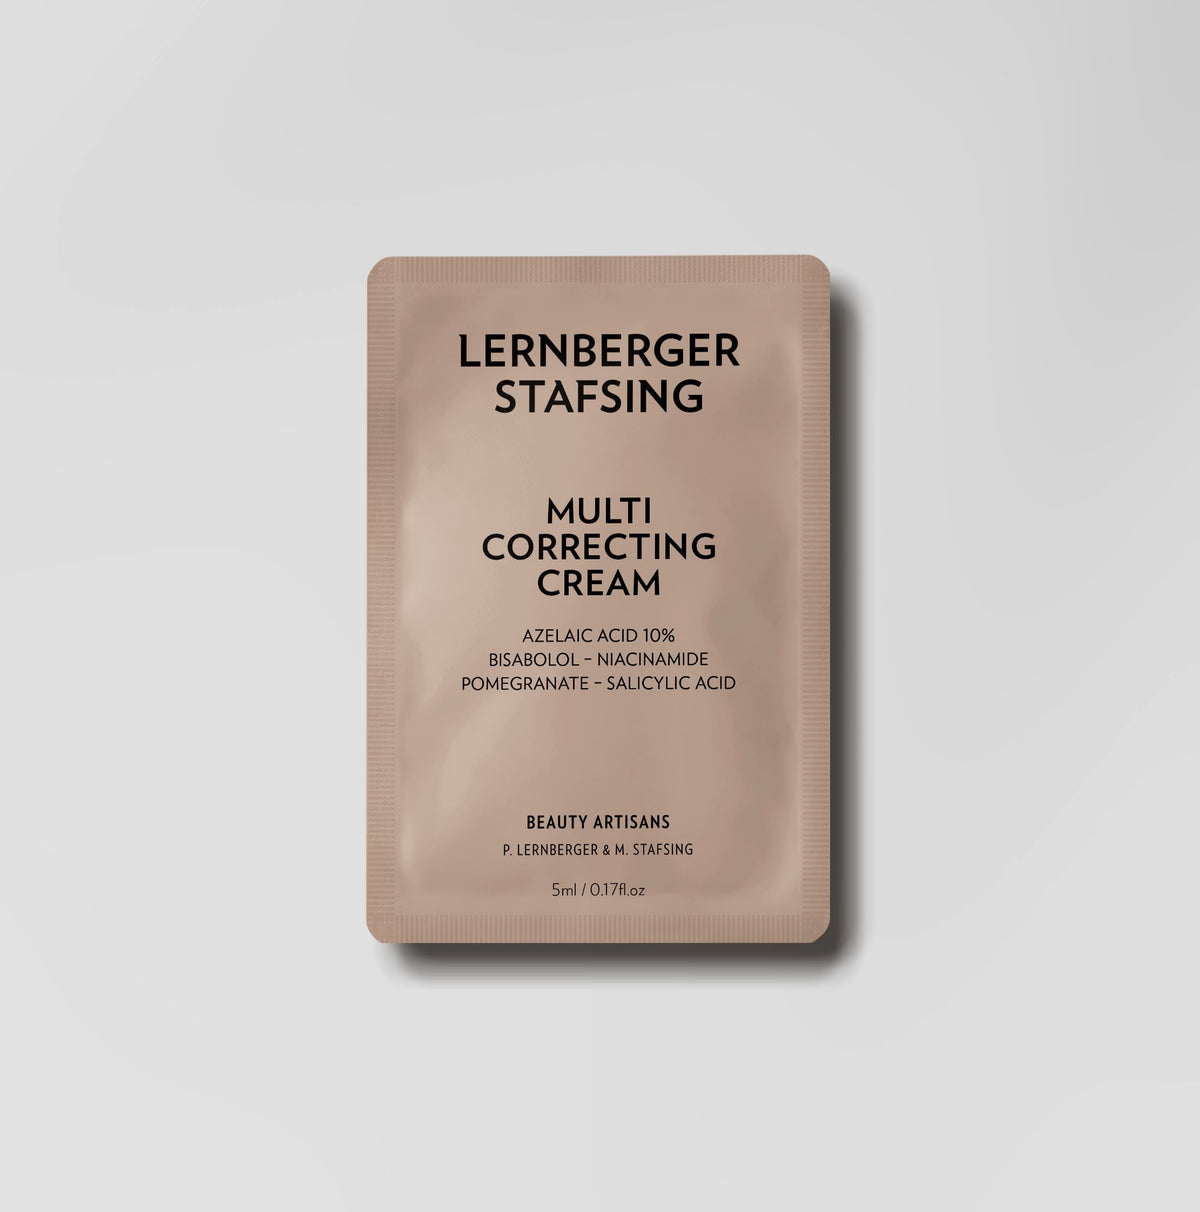 Lernberger Stafsing Multi Correcting Cream (5ml Sample)